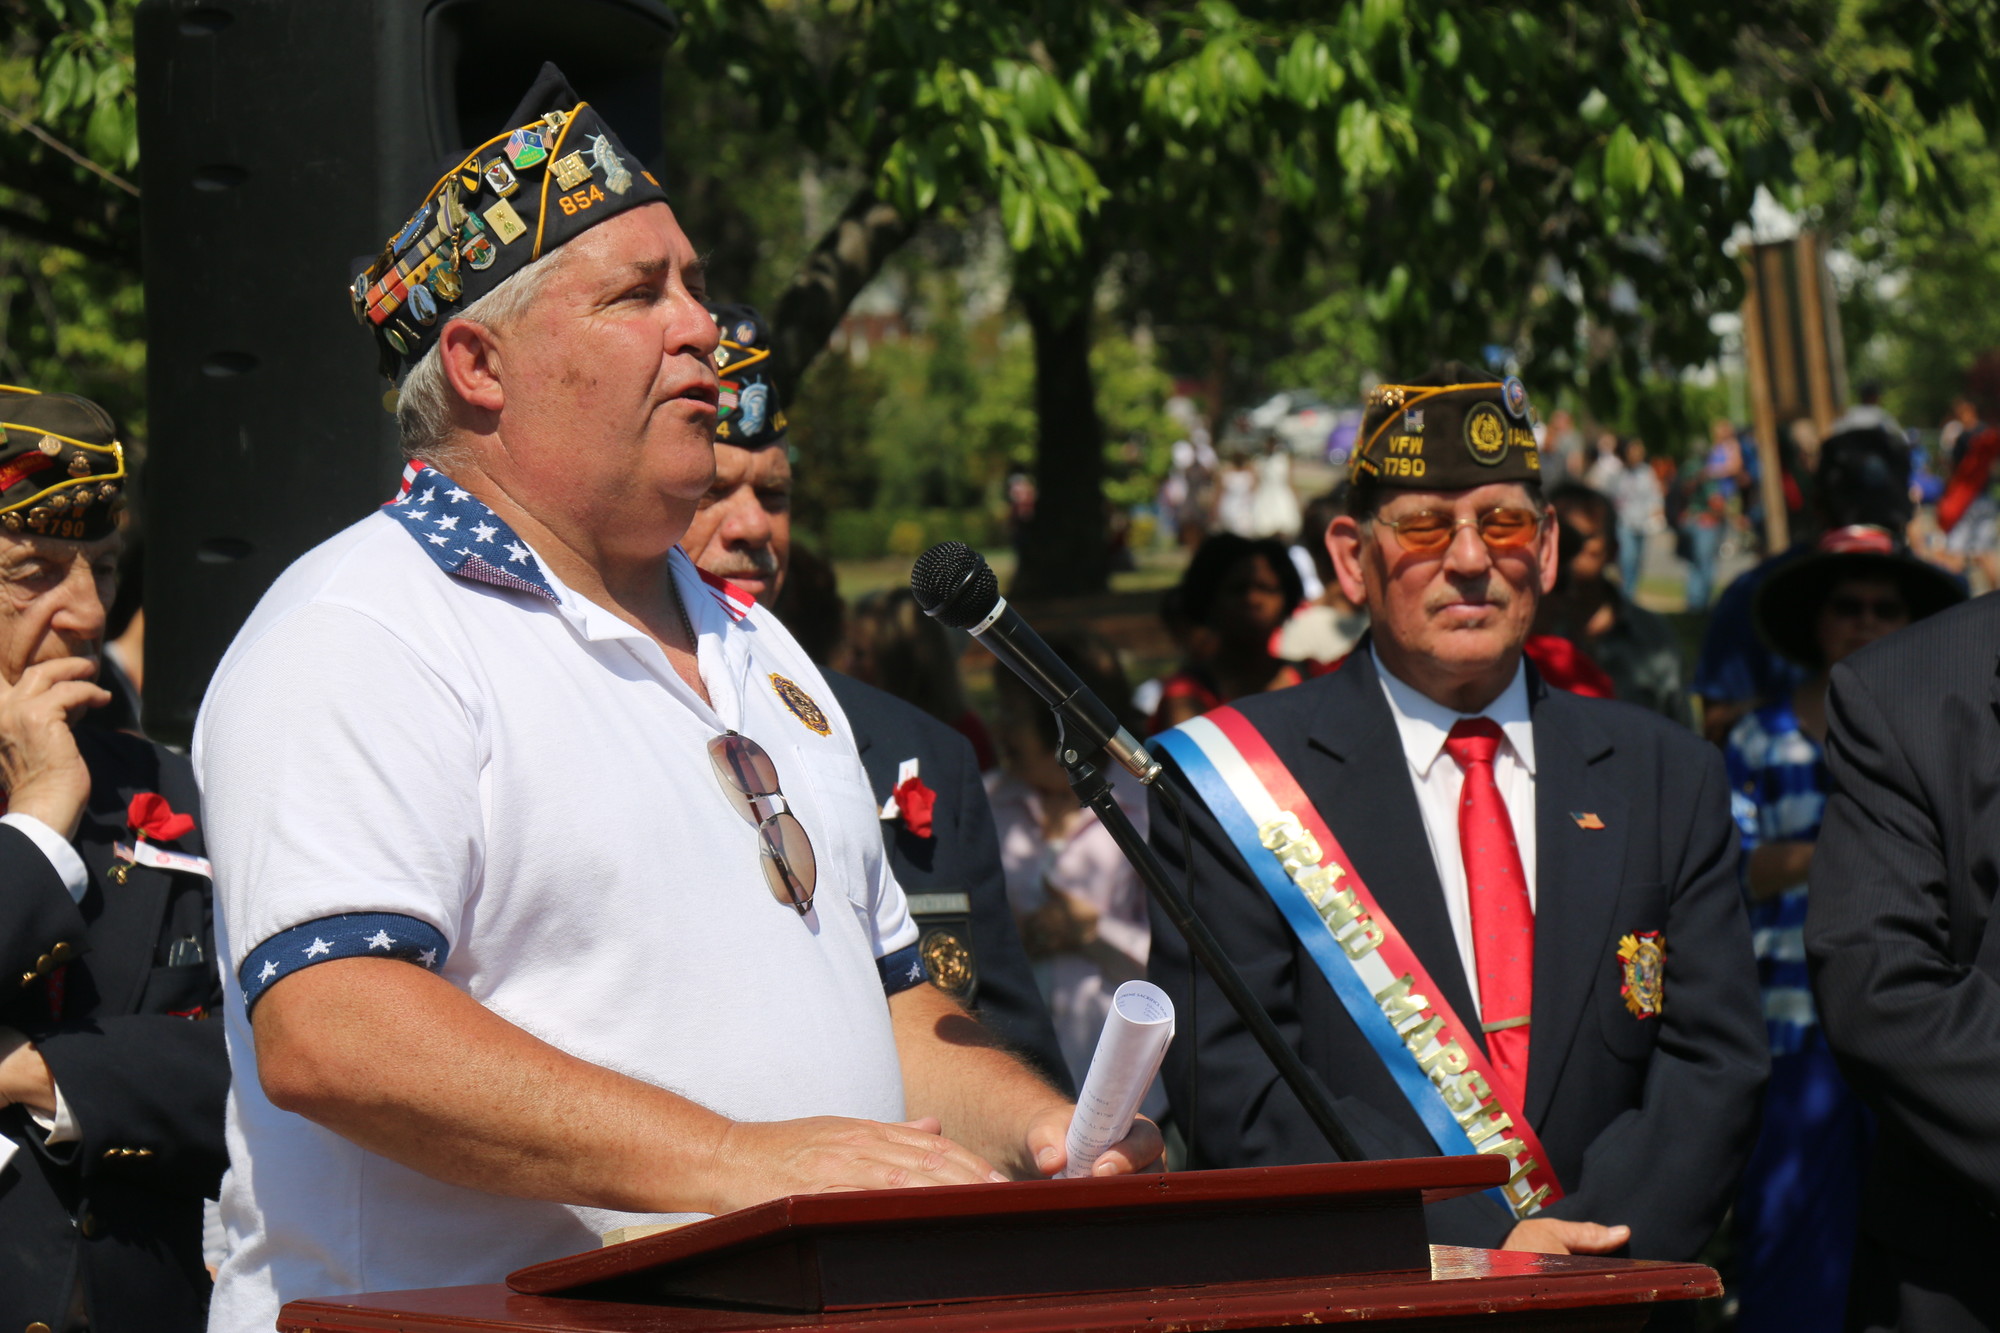 Parade chairman Marty Kielawa addressed the crowd. Behind him is the parade’s grand marshall, Vietnam veteran George Fox.